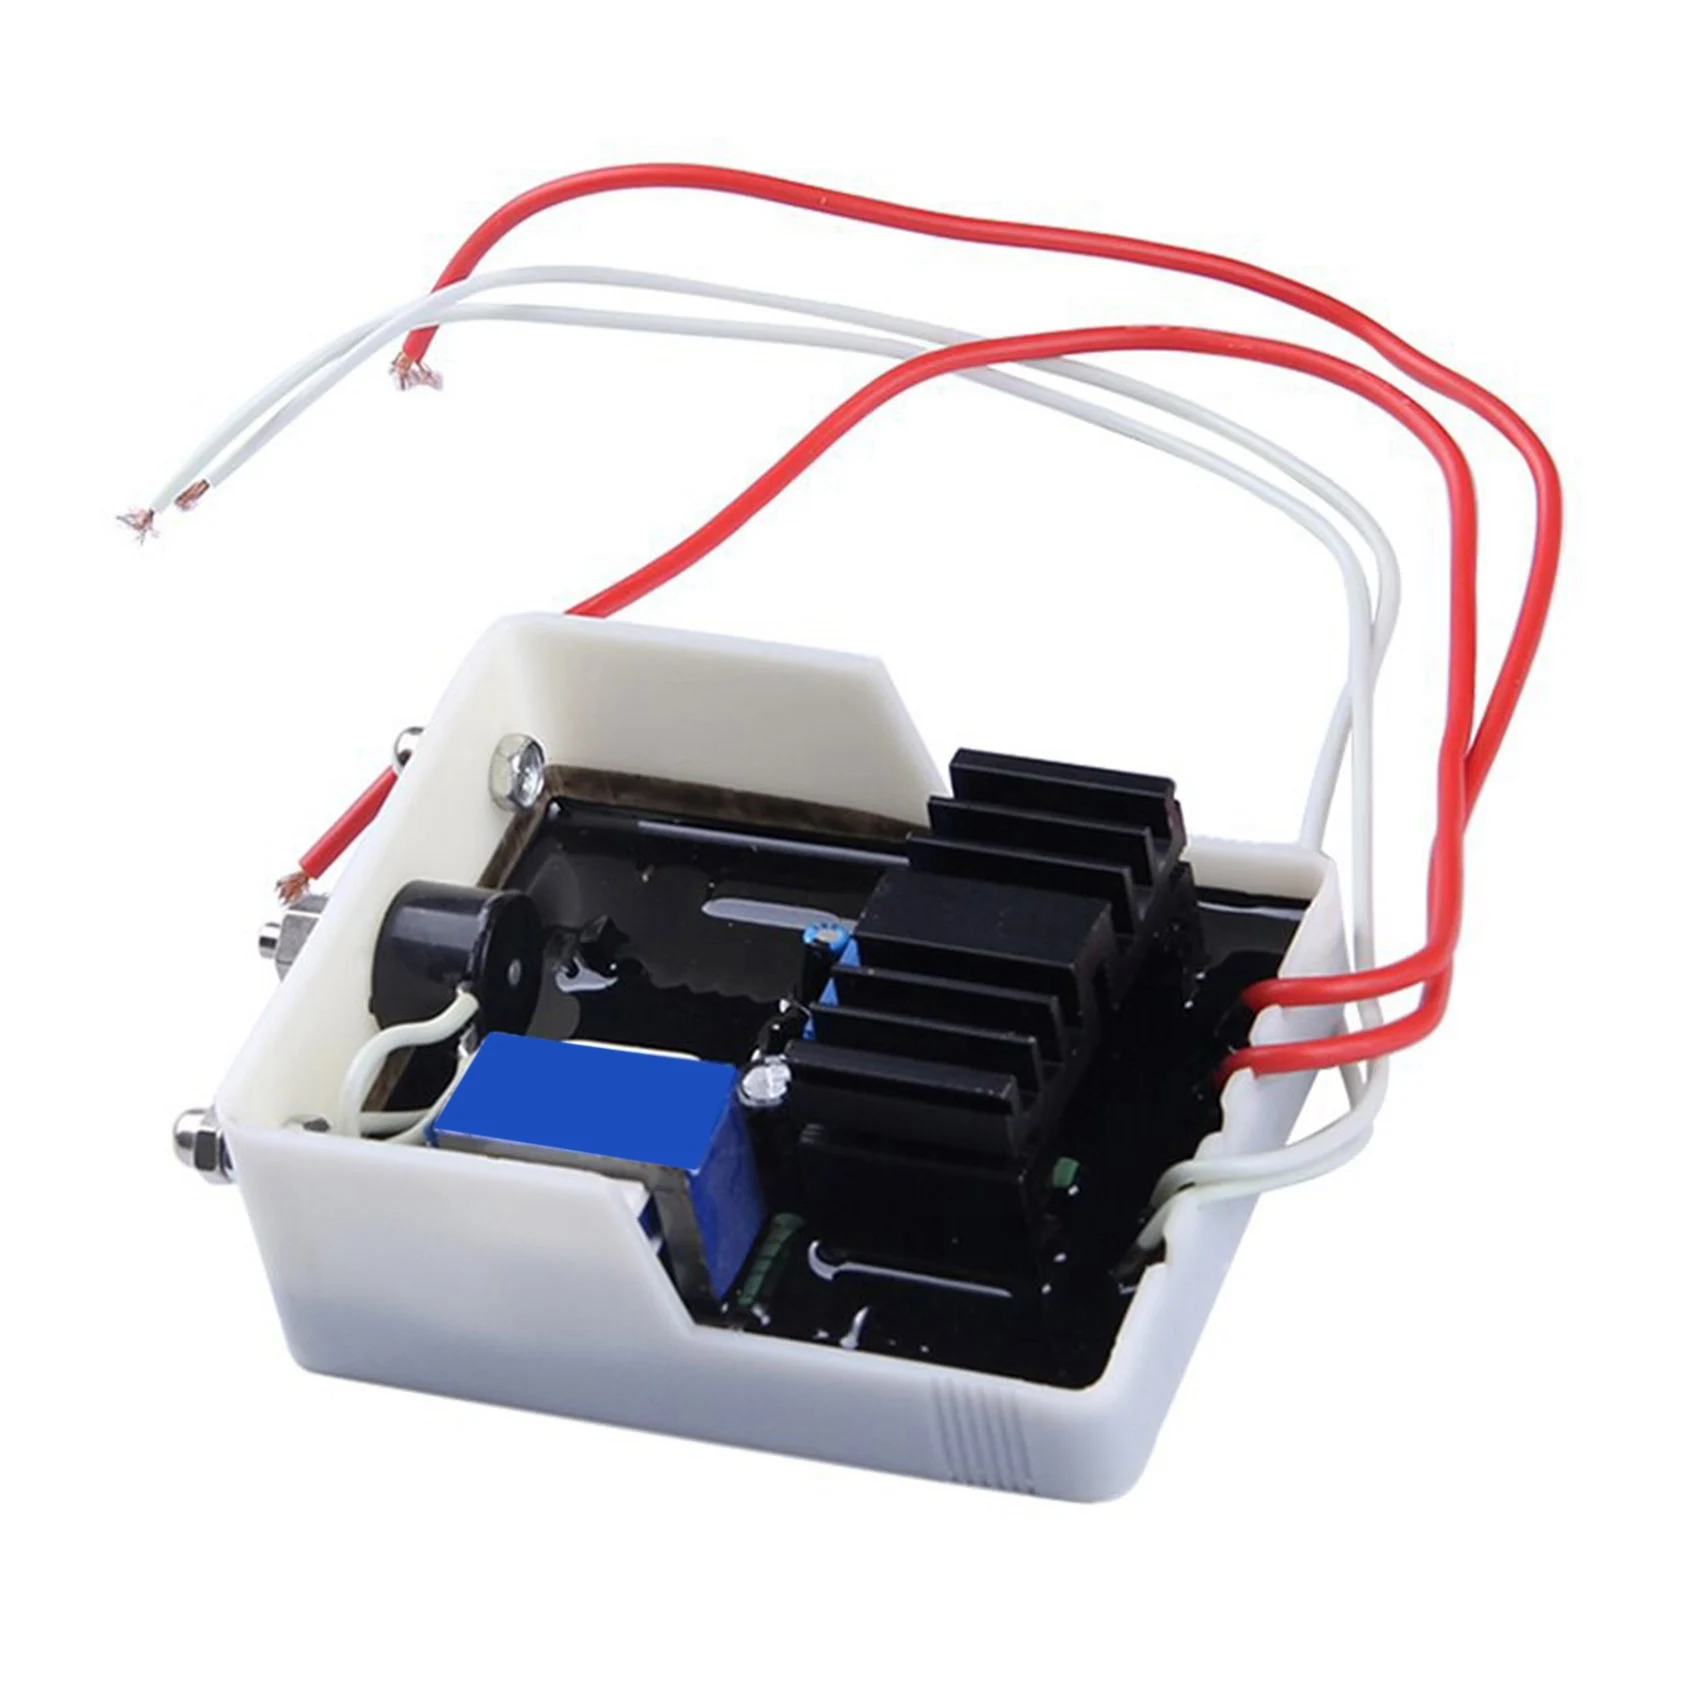 

Автоматический регулятор напряжения GB160C Brush AVR, запчасти для генератора переменного тока STC GB160 50 кВт